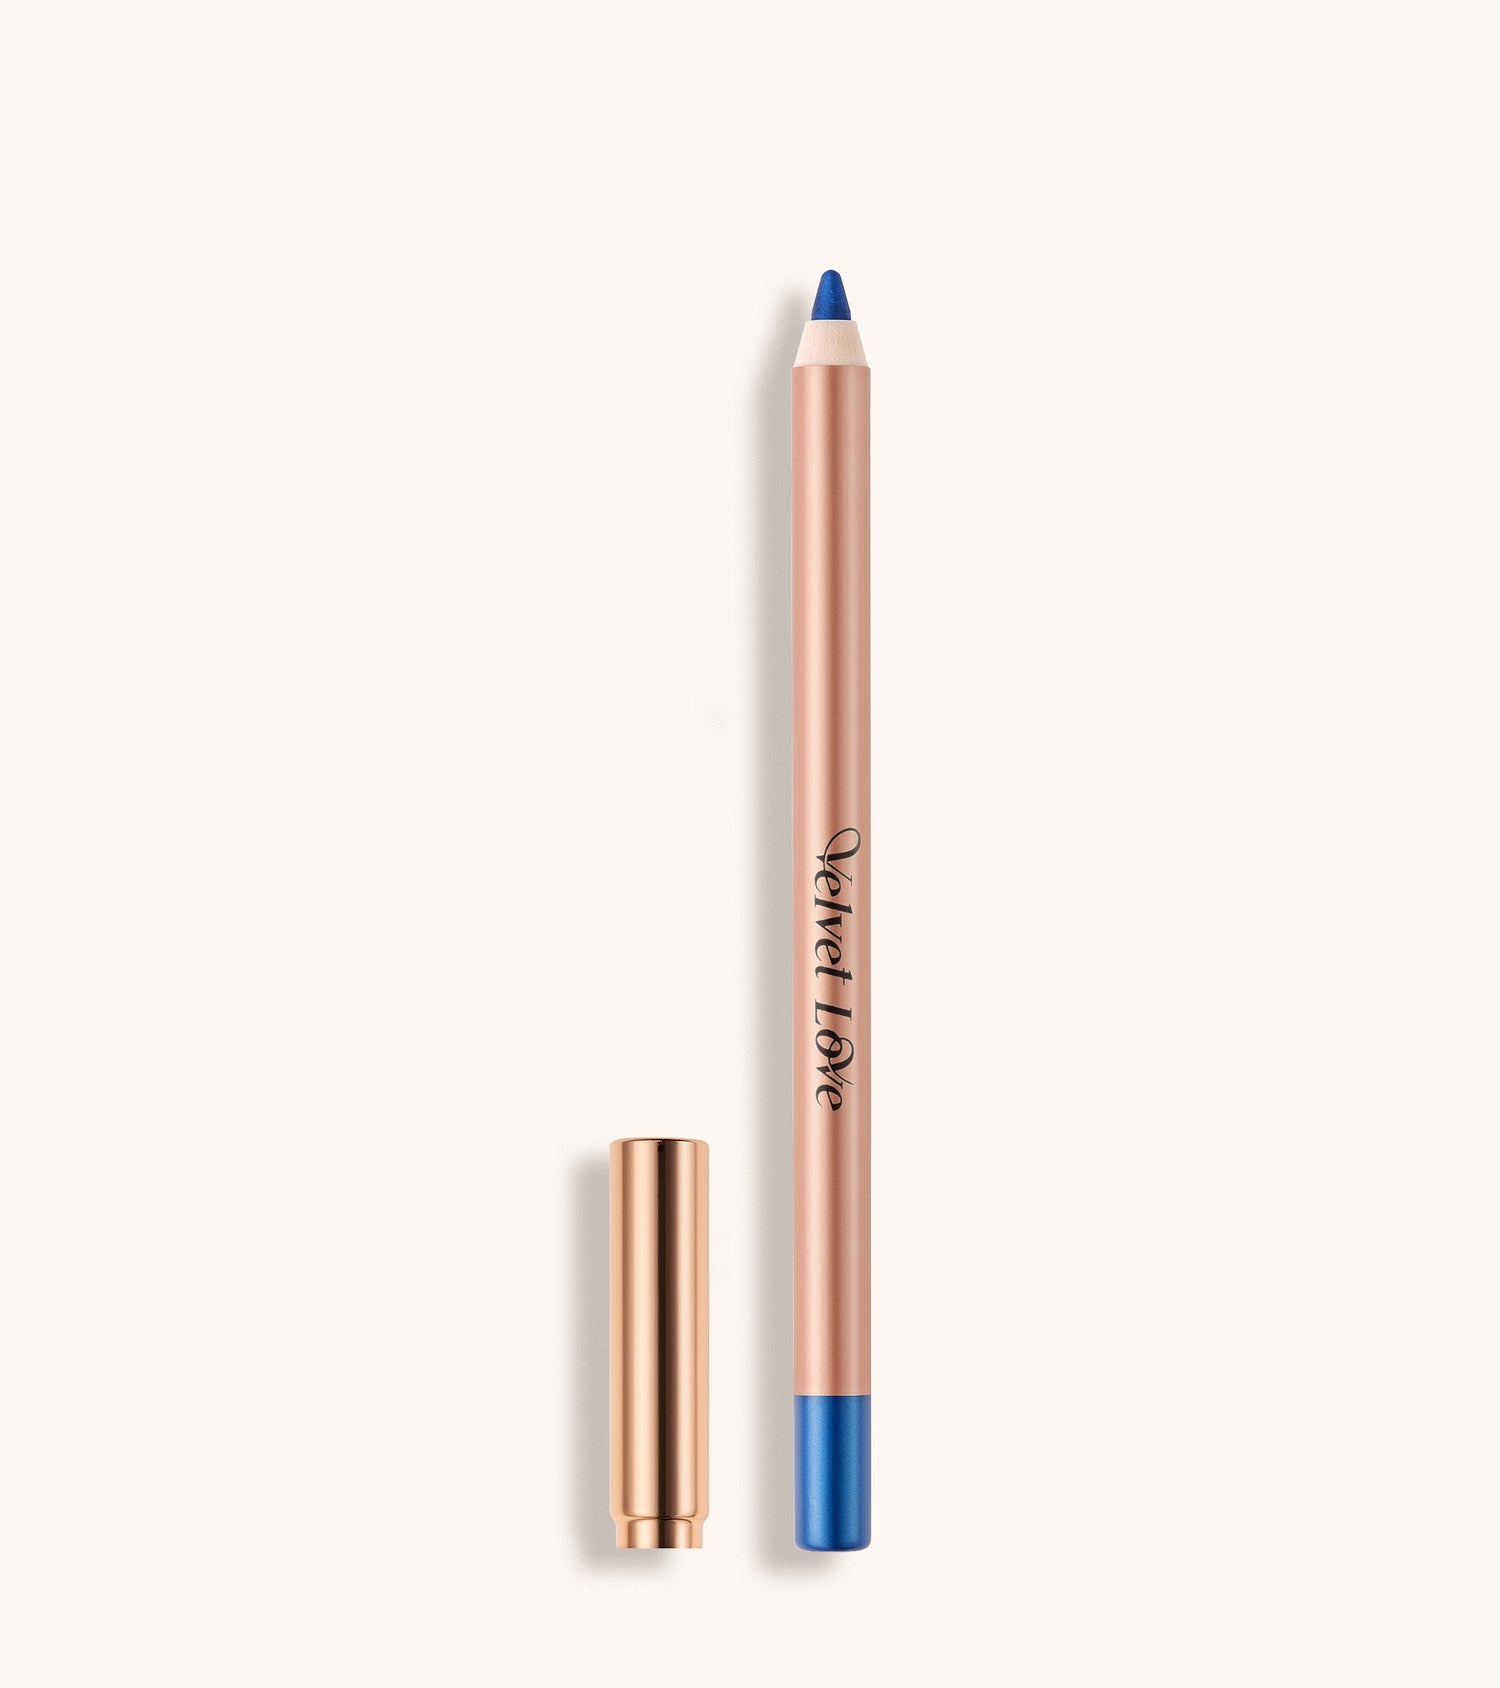 Velvet Love Eyeliner Pencil (Metallic Marine Blue) Main Image featured